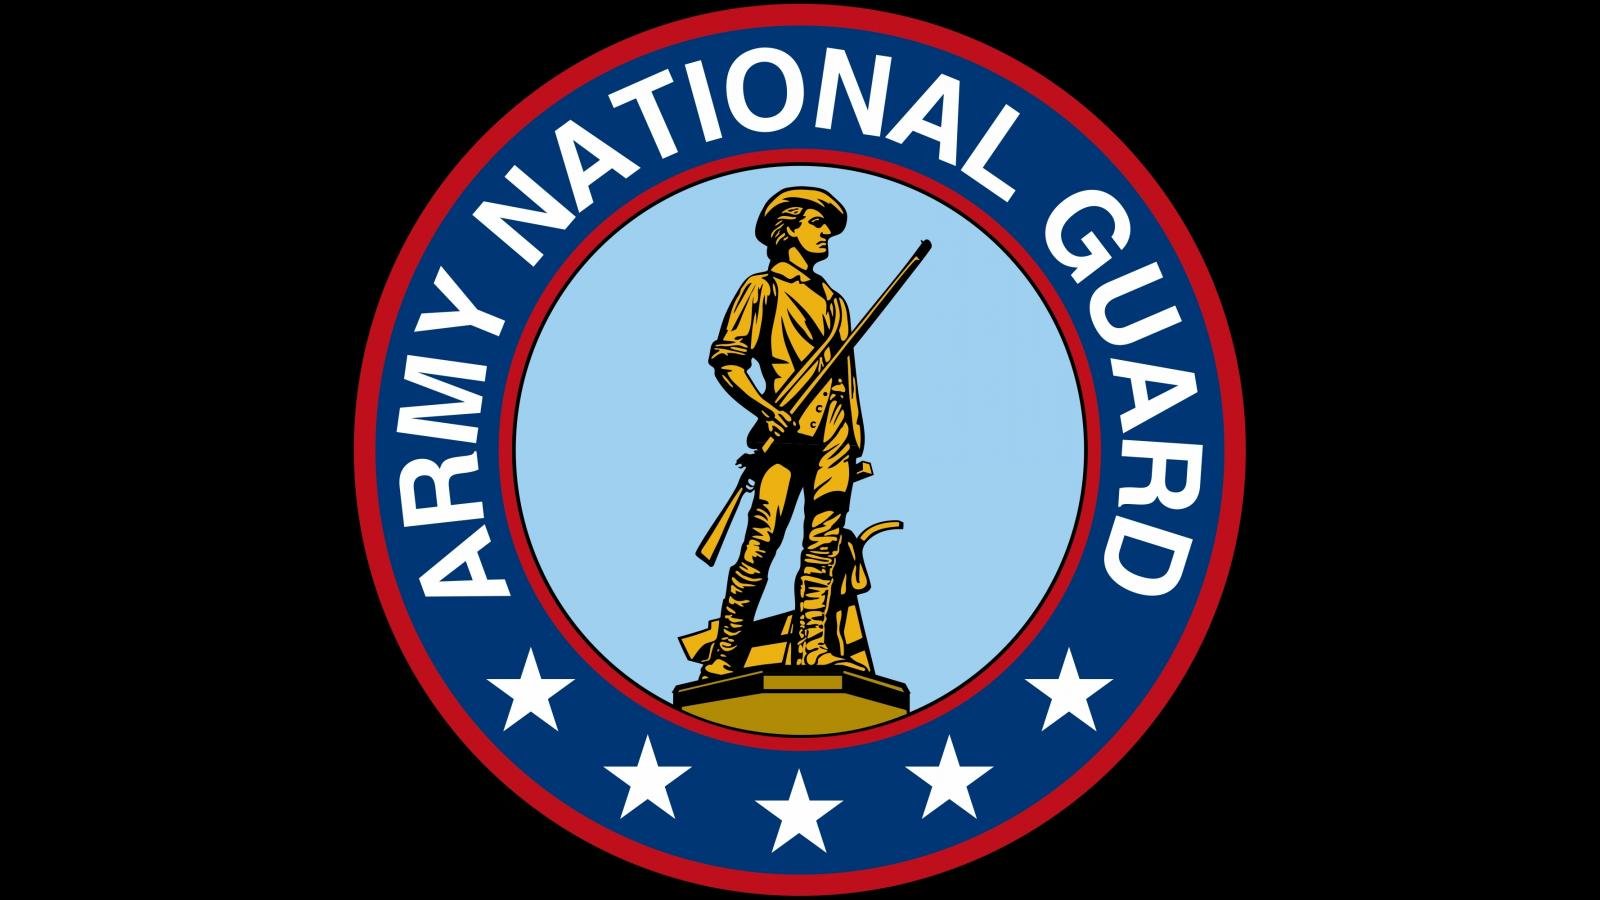 High resolution National Guard hd 1600x900 wallpaper ID:169394 for desktop